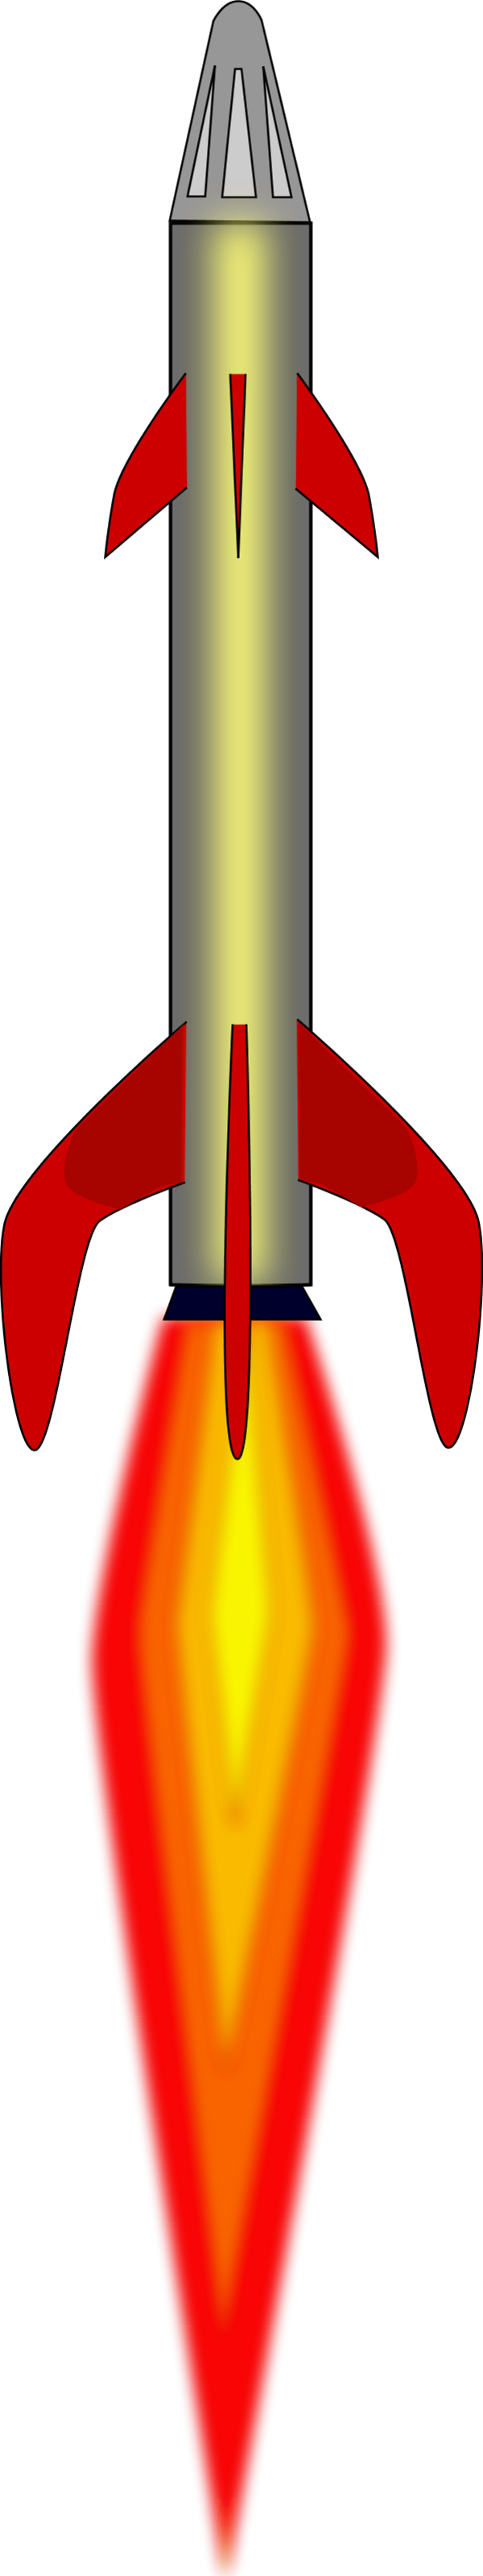 Space Rocket Cartoon Liftoff Blast - Rocket Launcher Rocket Png (600x3198)